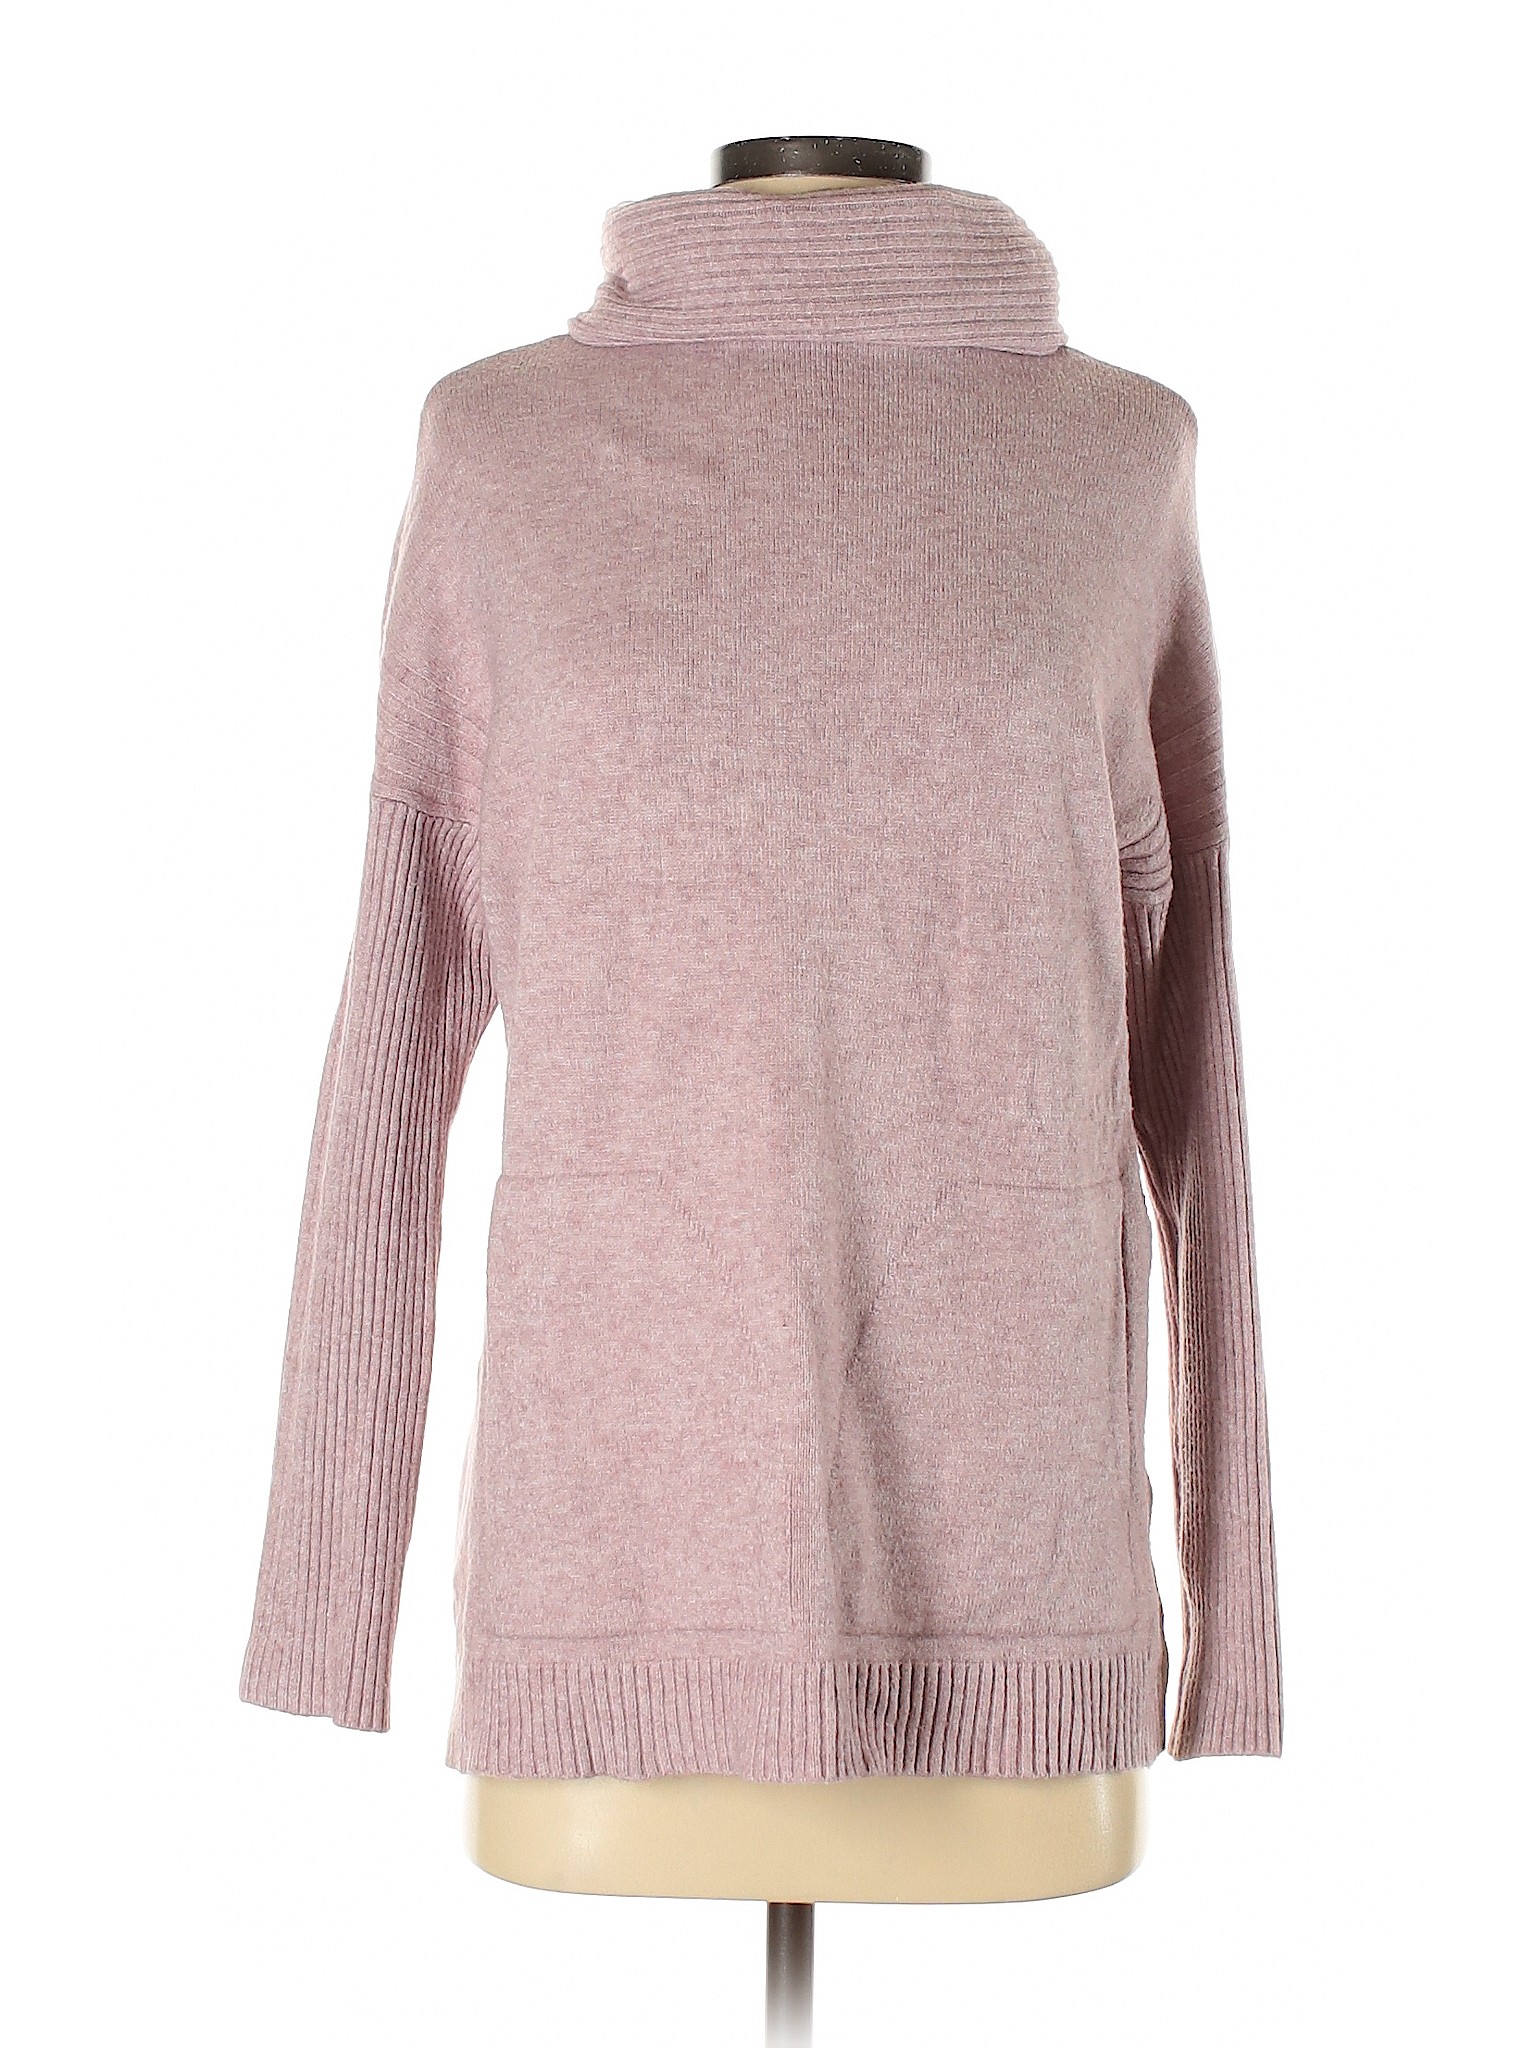 Cyrus Women Pink Turtleneck Sweater XS | eBay